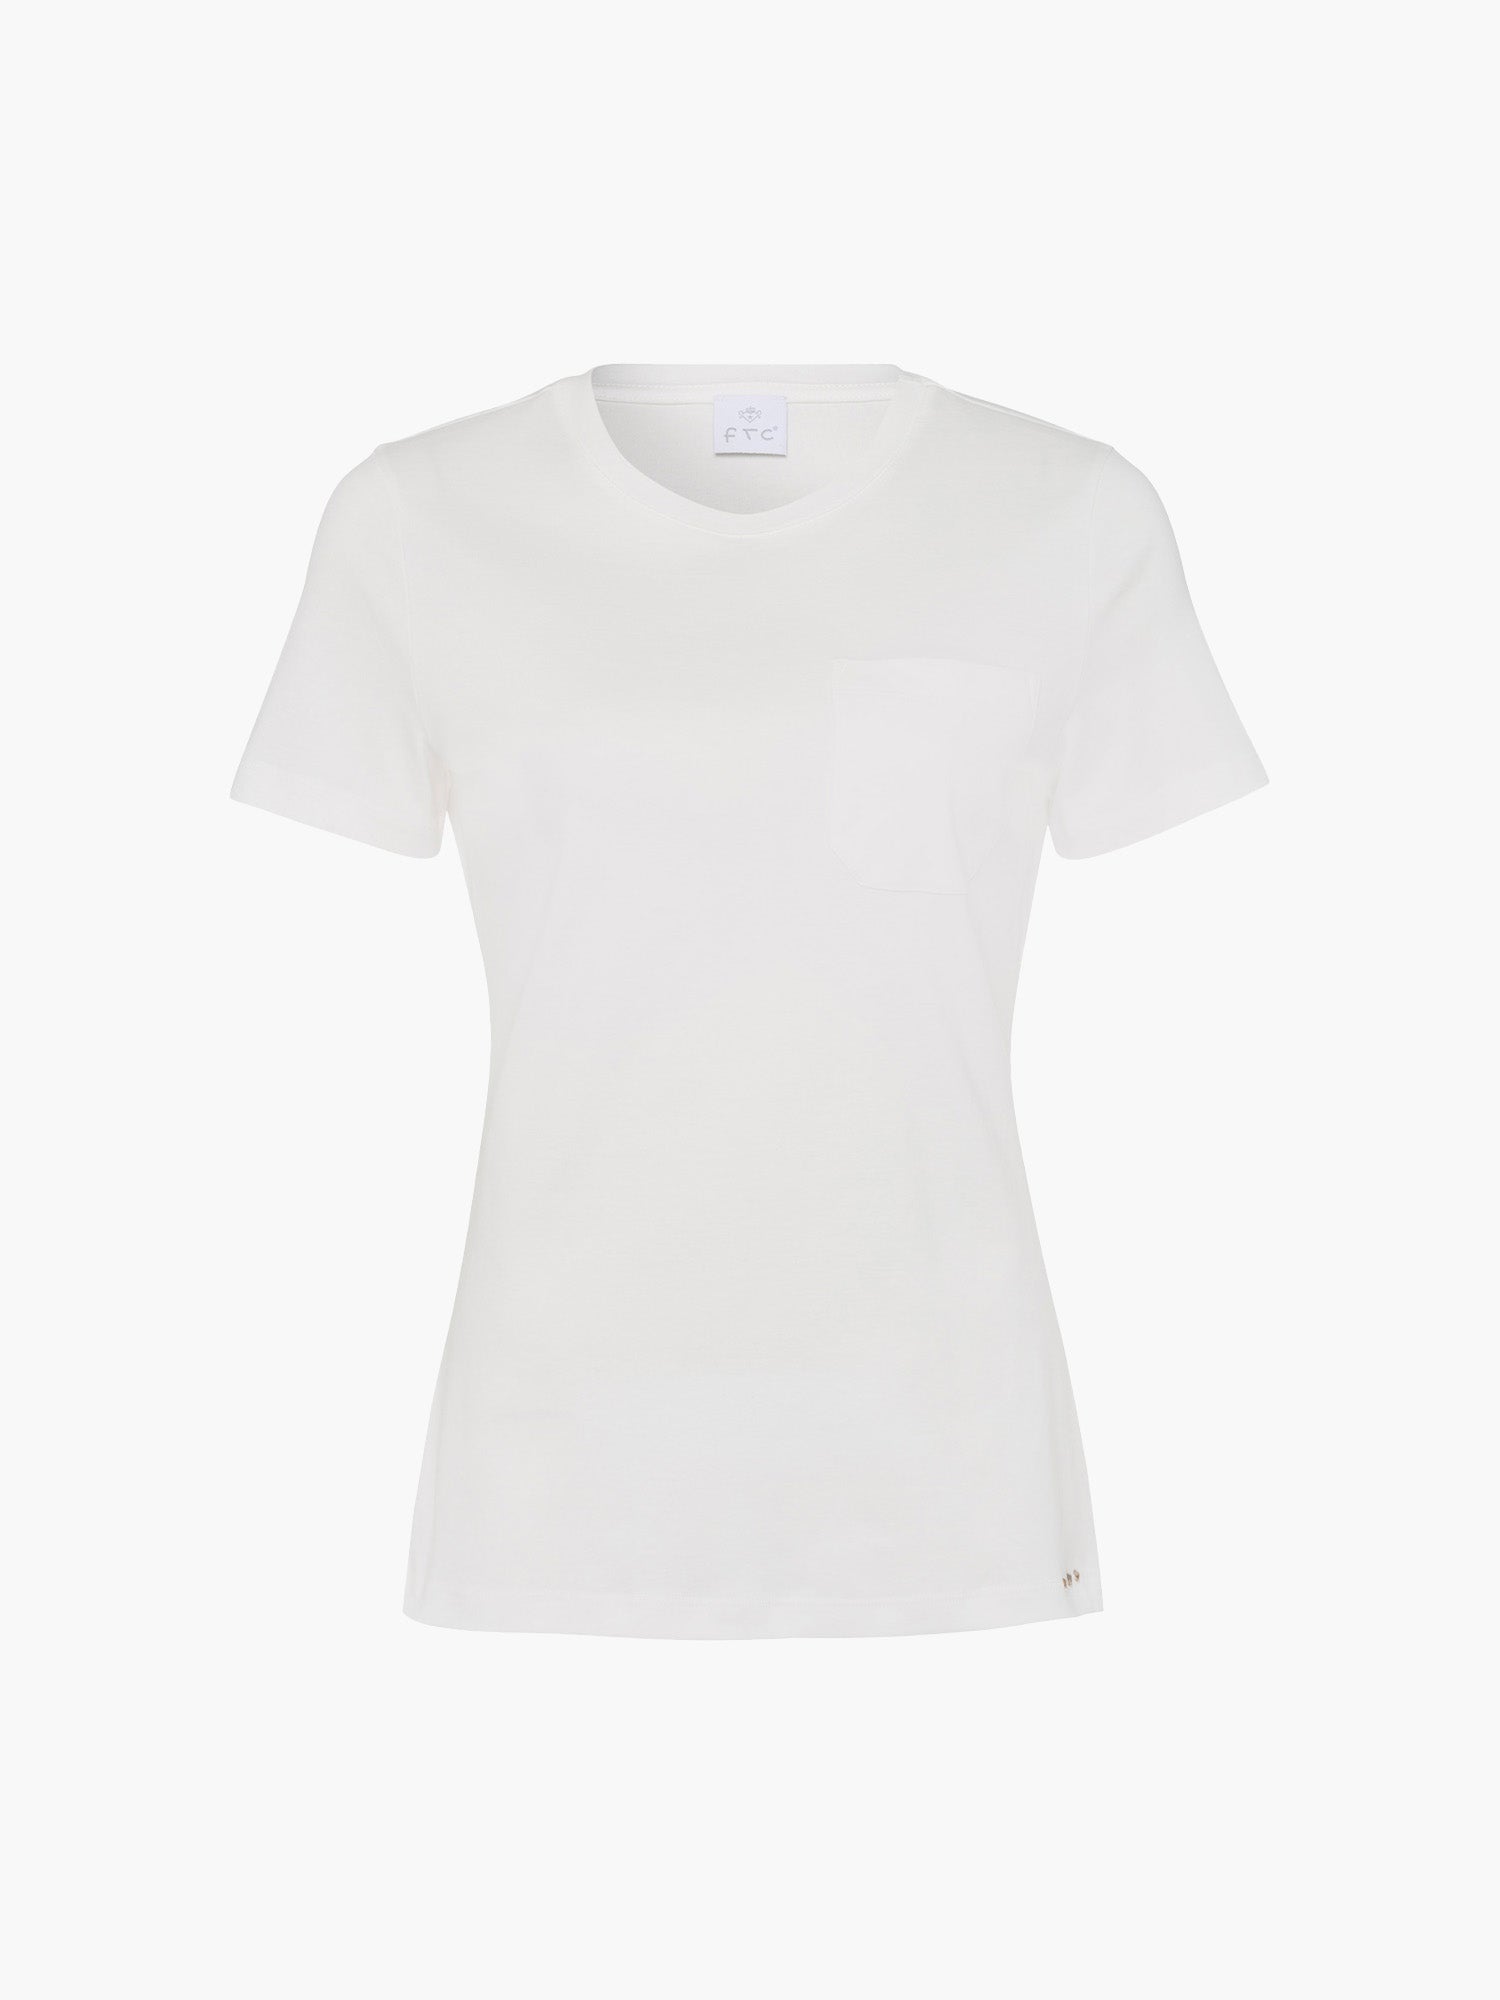 FTC-CASHMERE-OUTLET-SALE-T-Shirt RN 1/2 100% Organic Cotton-Shirts-S-Pristine White-MUNICH_VILLAGE-by-ARCHIVIST